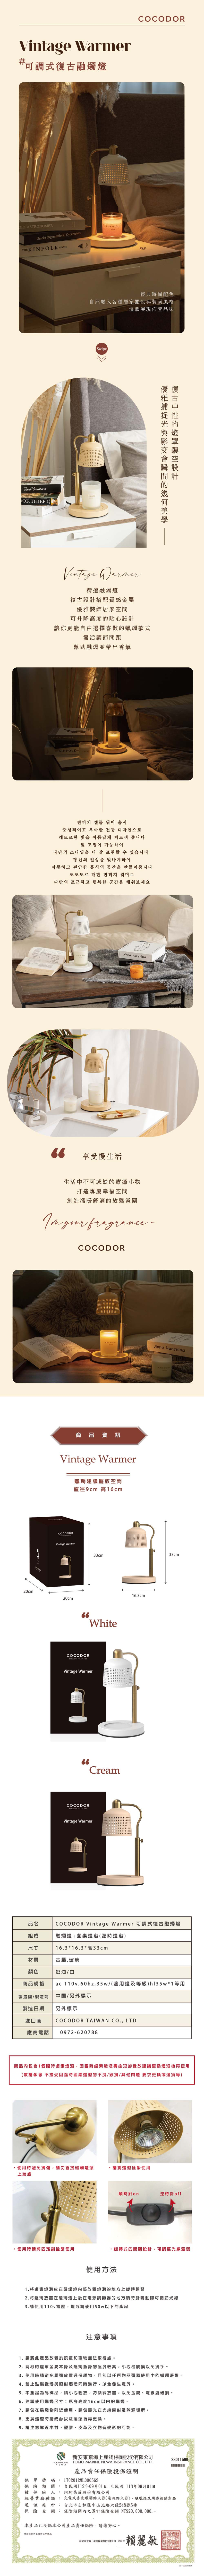 【cocodor】復古融燭燈+ 大豆蠟燭130g